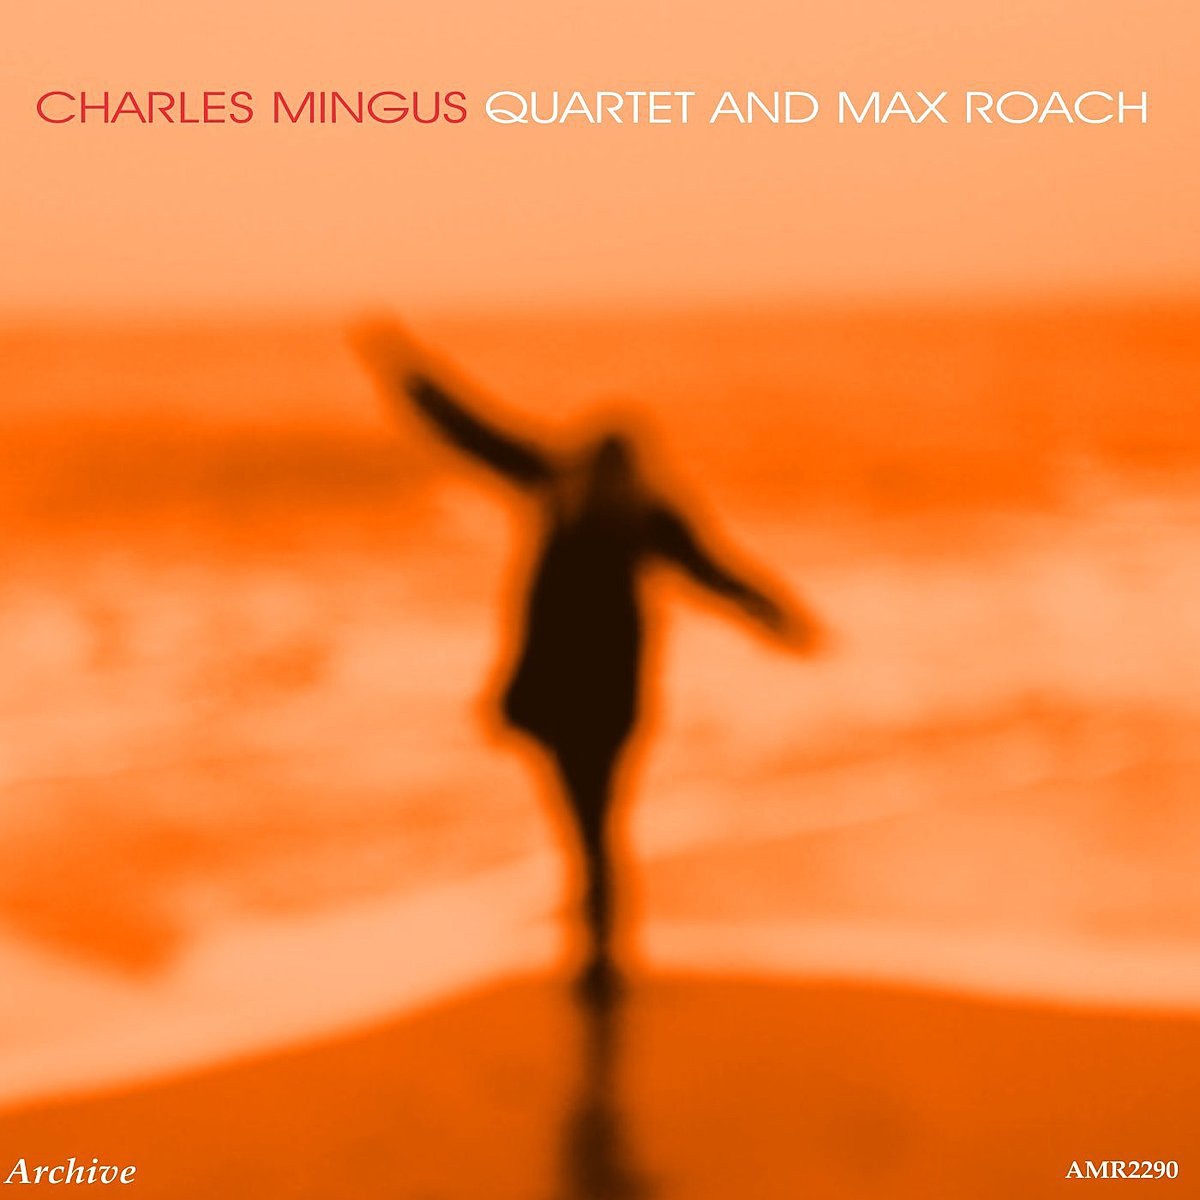 Charles Mingus Quartet and Max Roach